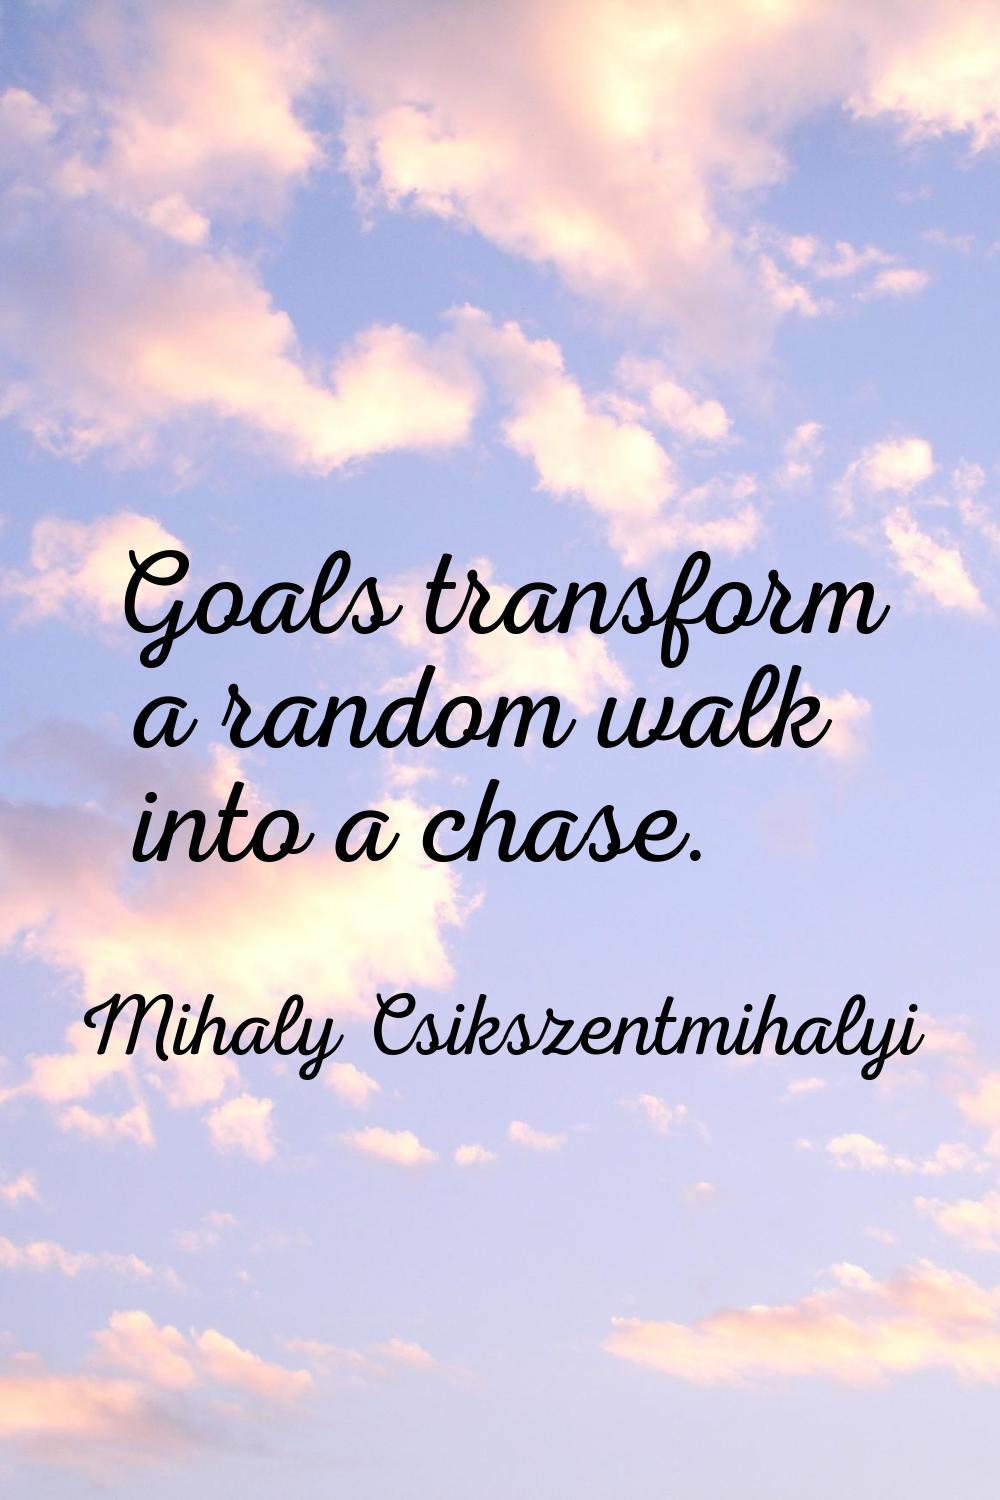 Goals transform a random walk into a chase.